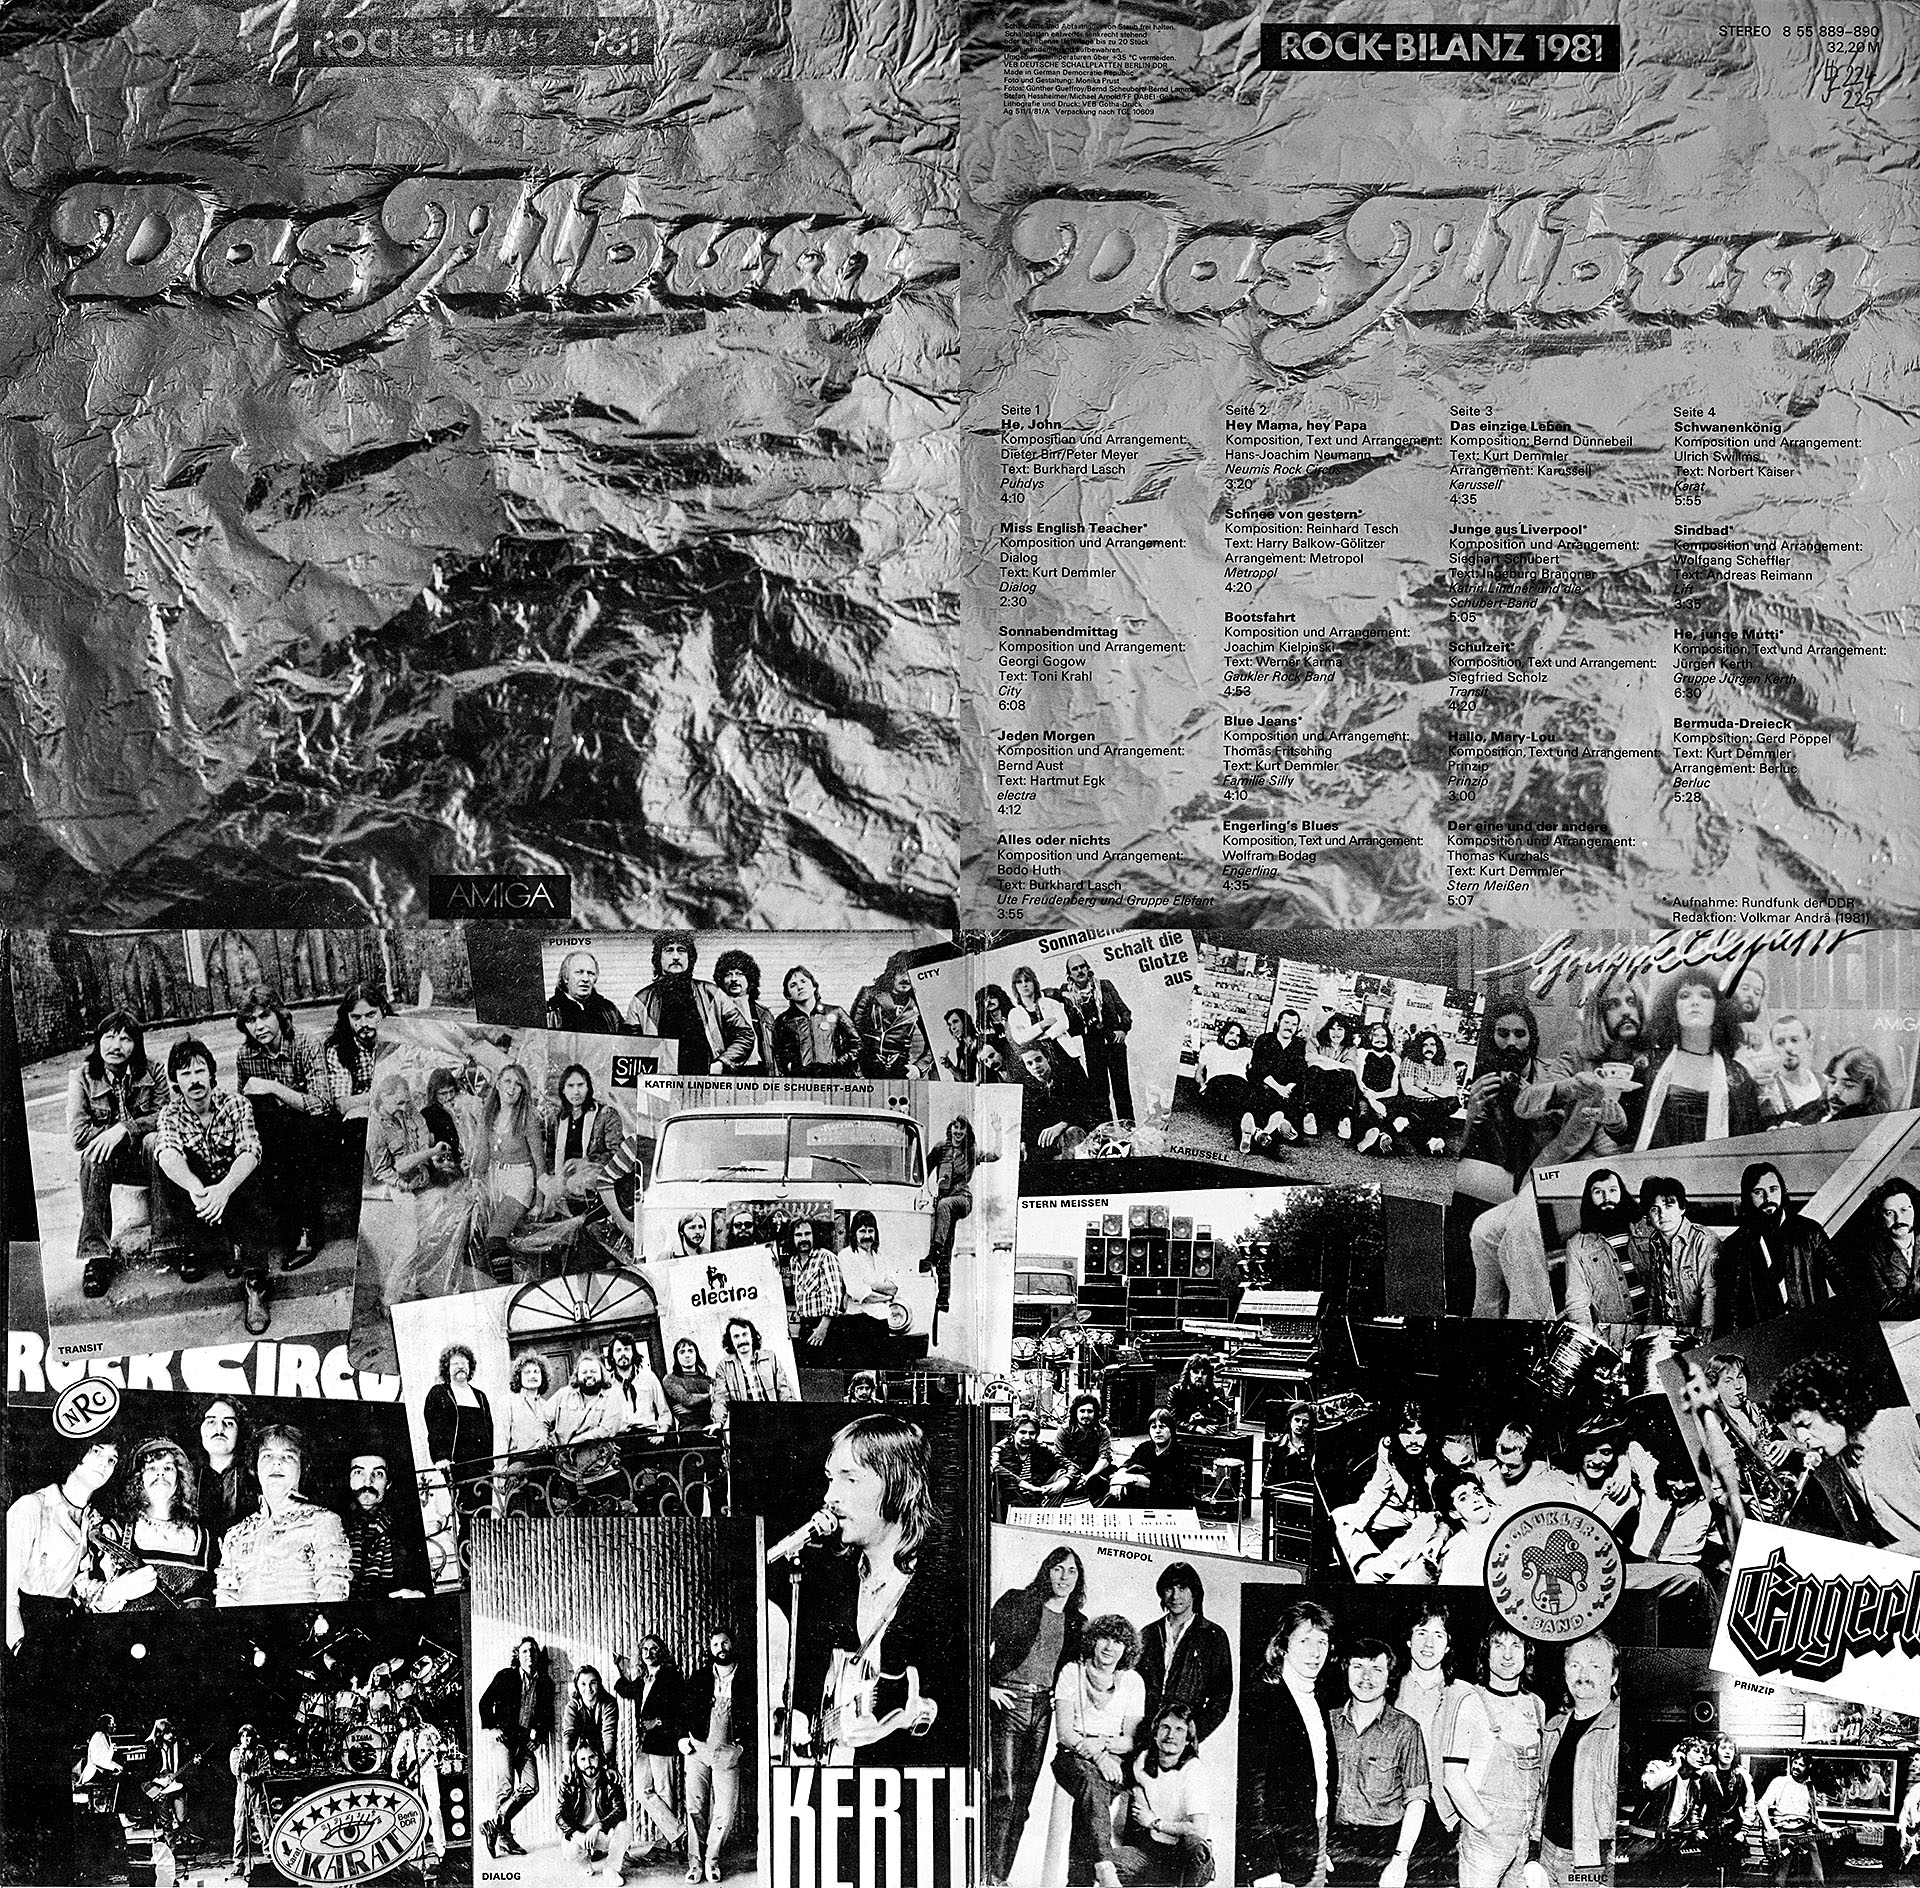 Rock - Bilanz 1981 - Das Album - Puhdys / City / electra / Karat u. v. a. m.